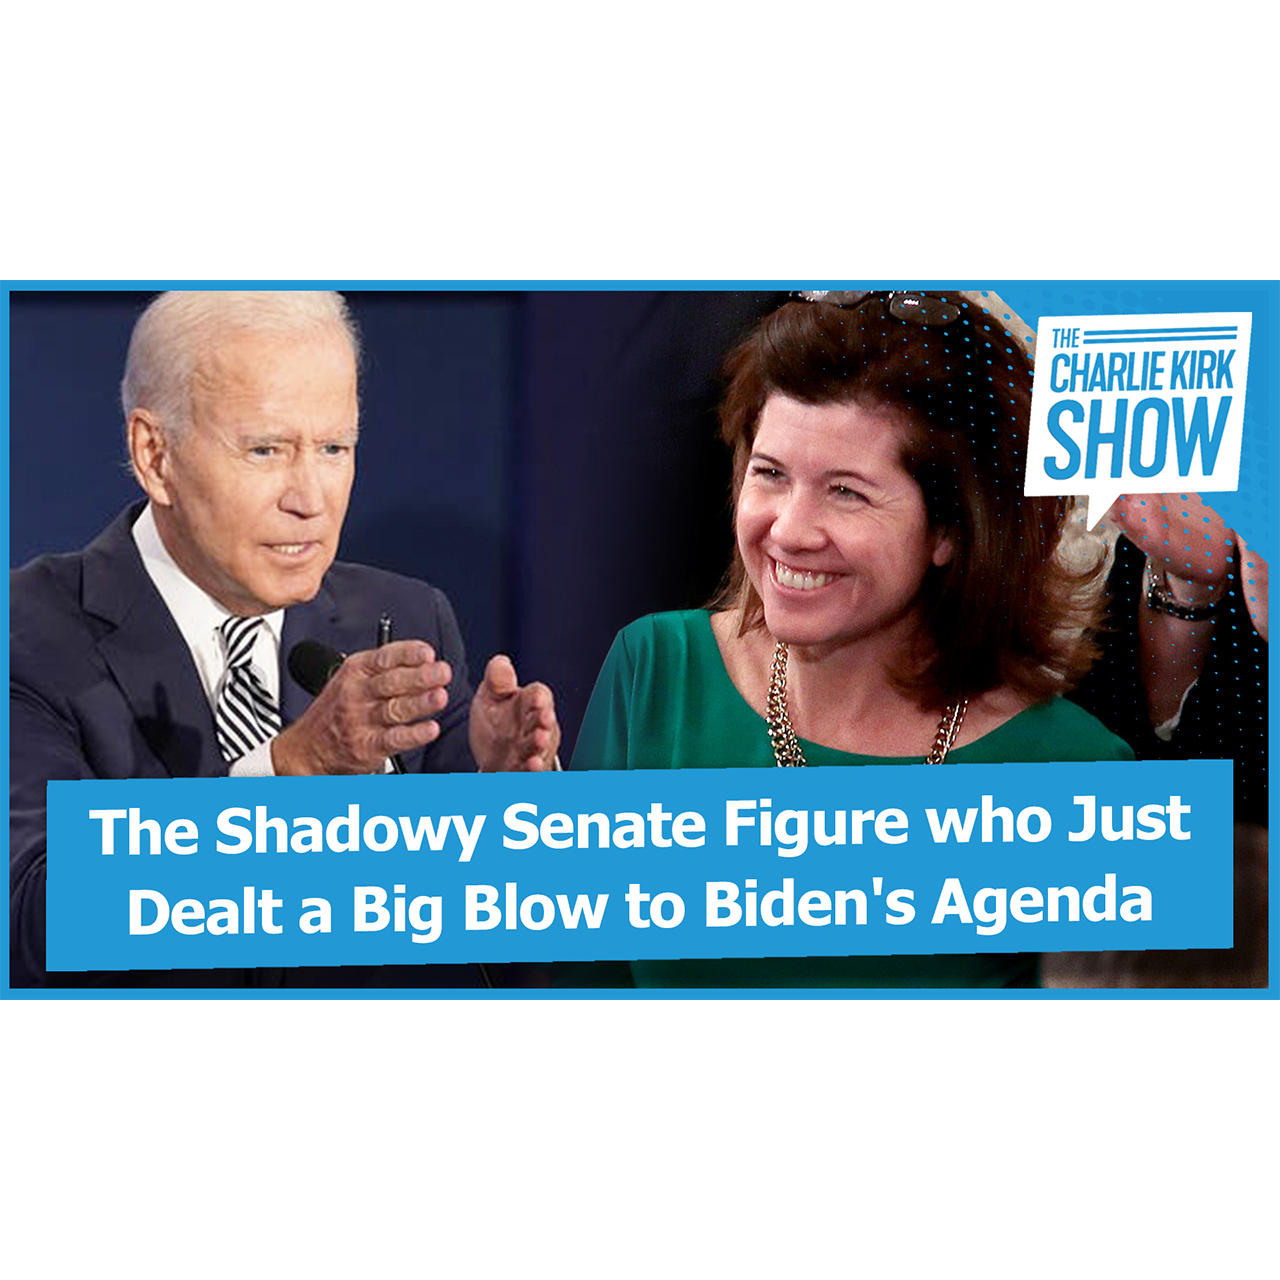 The Shadowy Senate Figure who Just Dealt a Big Blow to Biden's Agenda